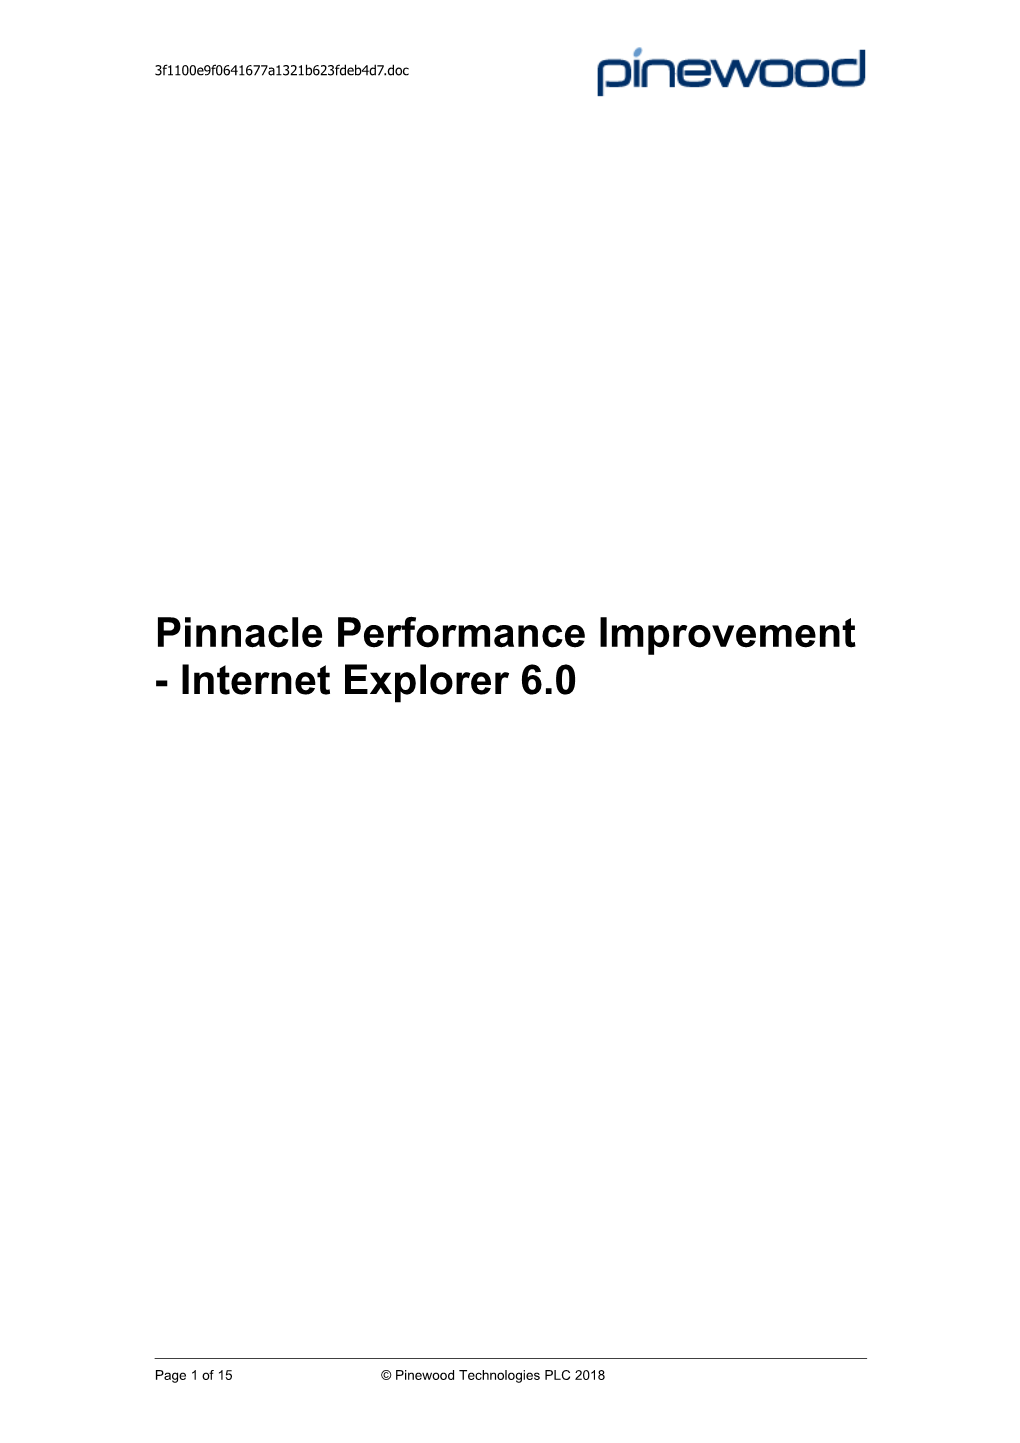 Pinnacle Performance Improvement (I E 6.0)